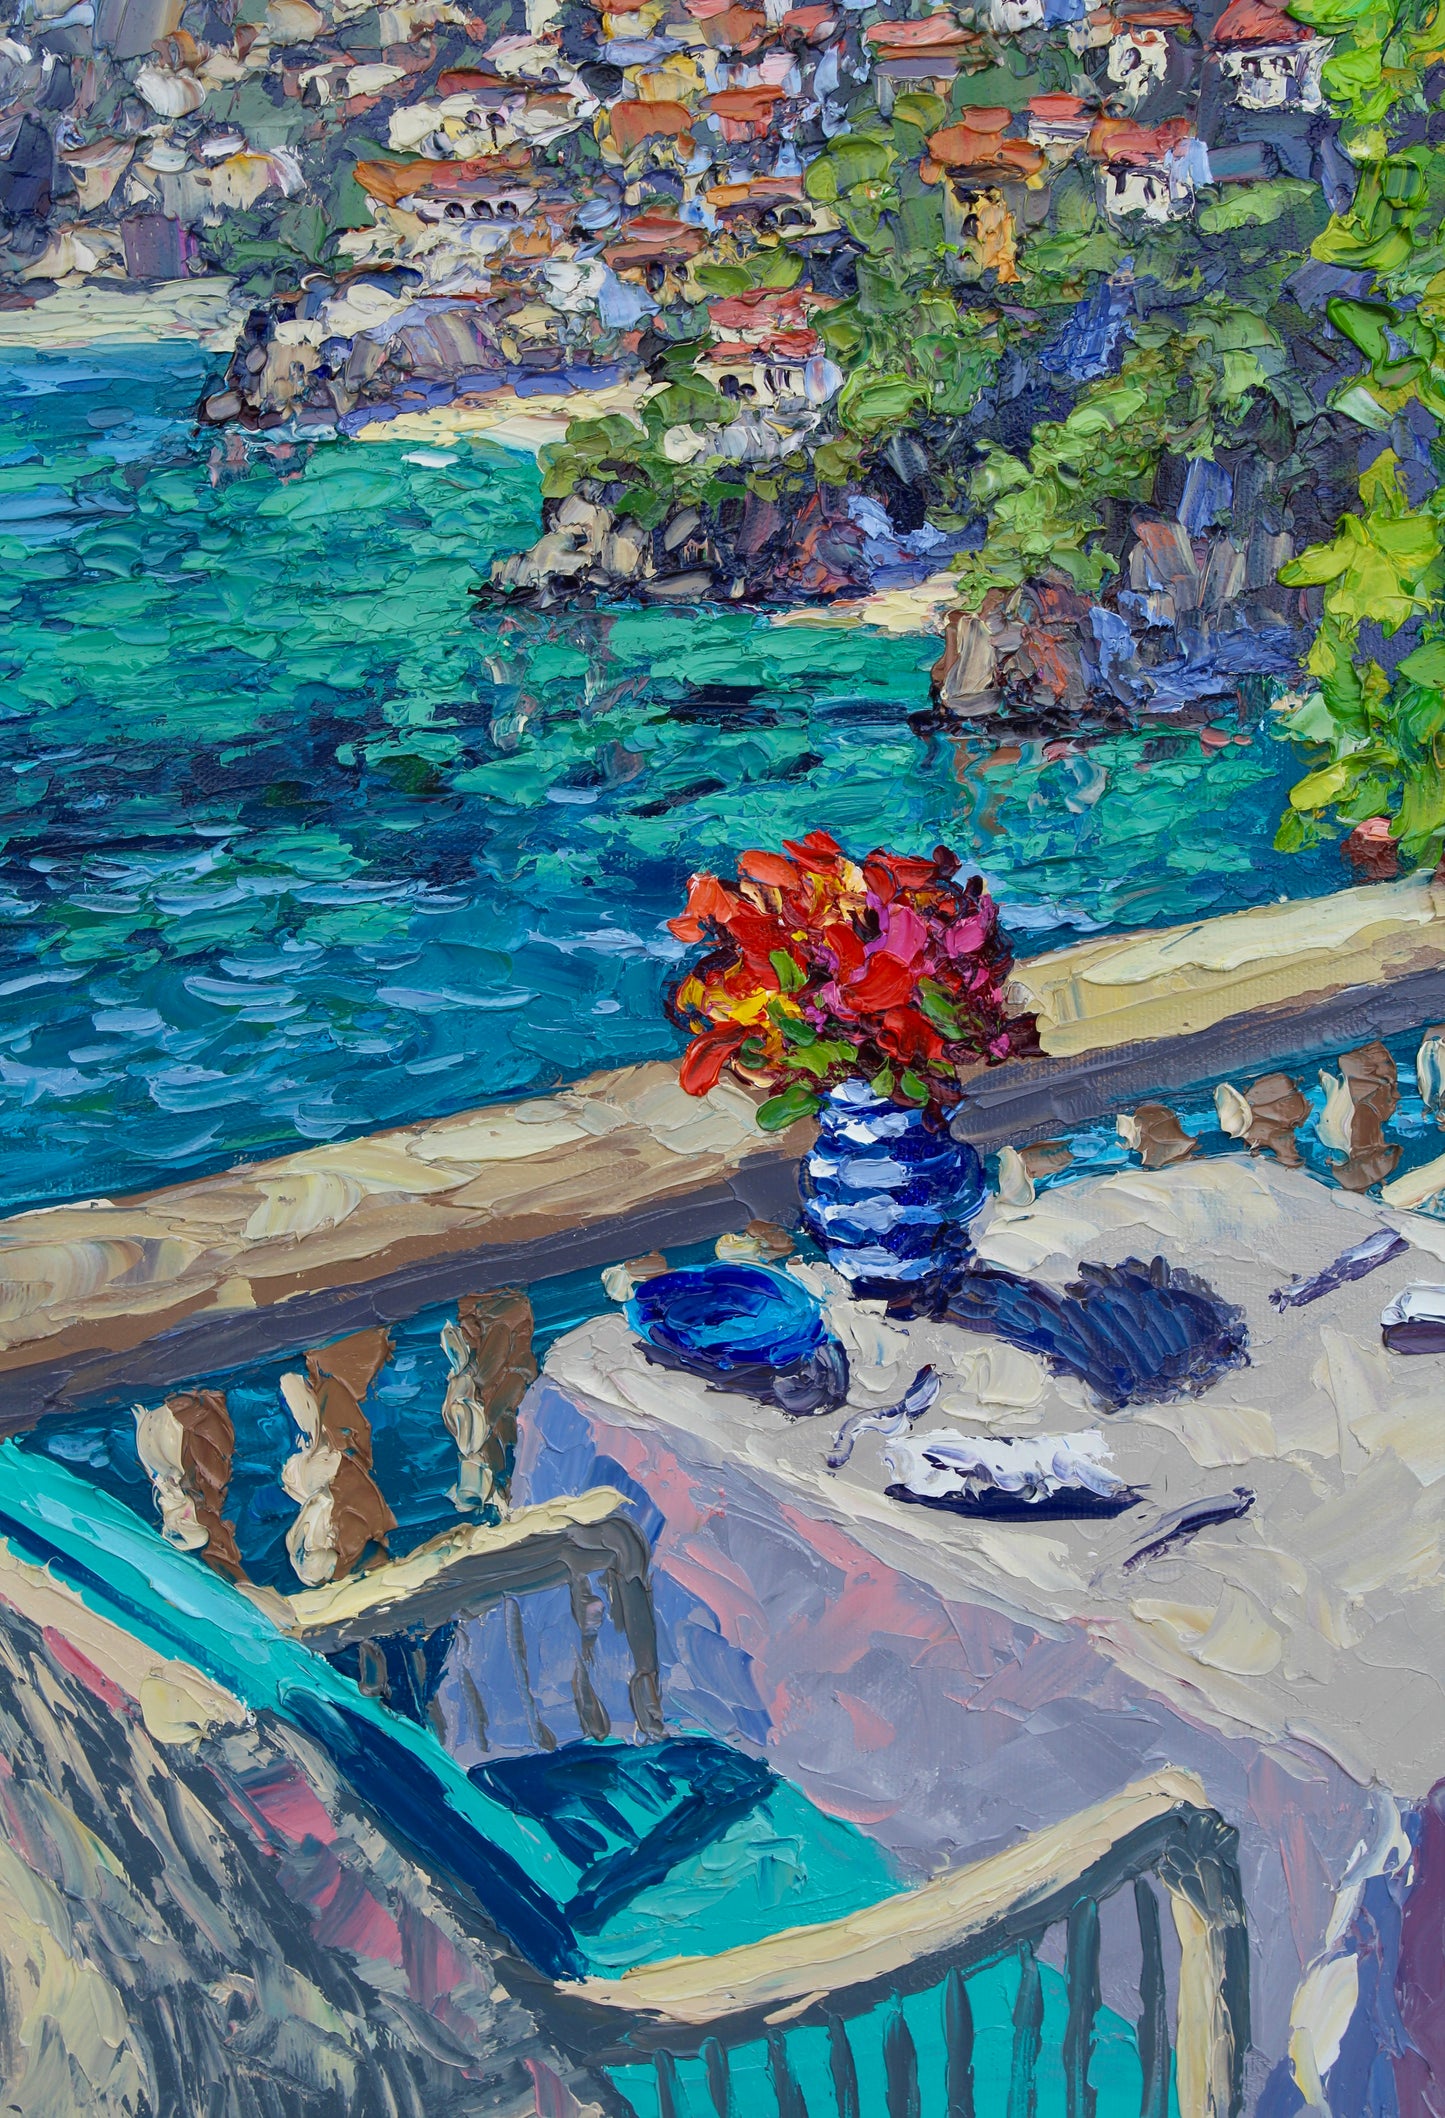 Amalfi View, An Original 20" x 14" Textured Oil Painting